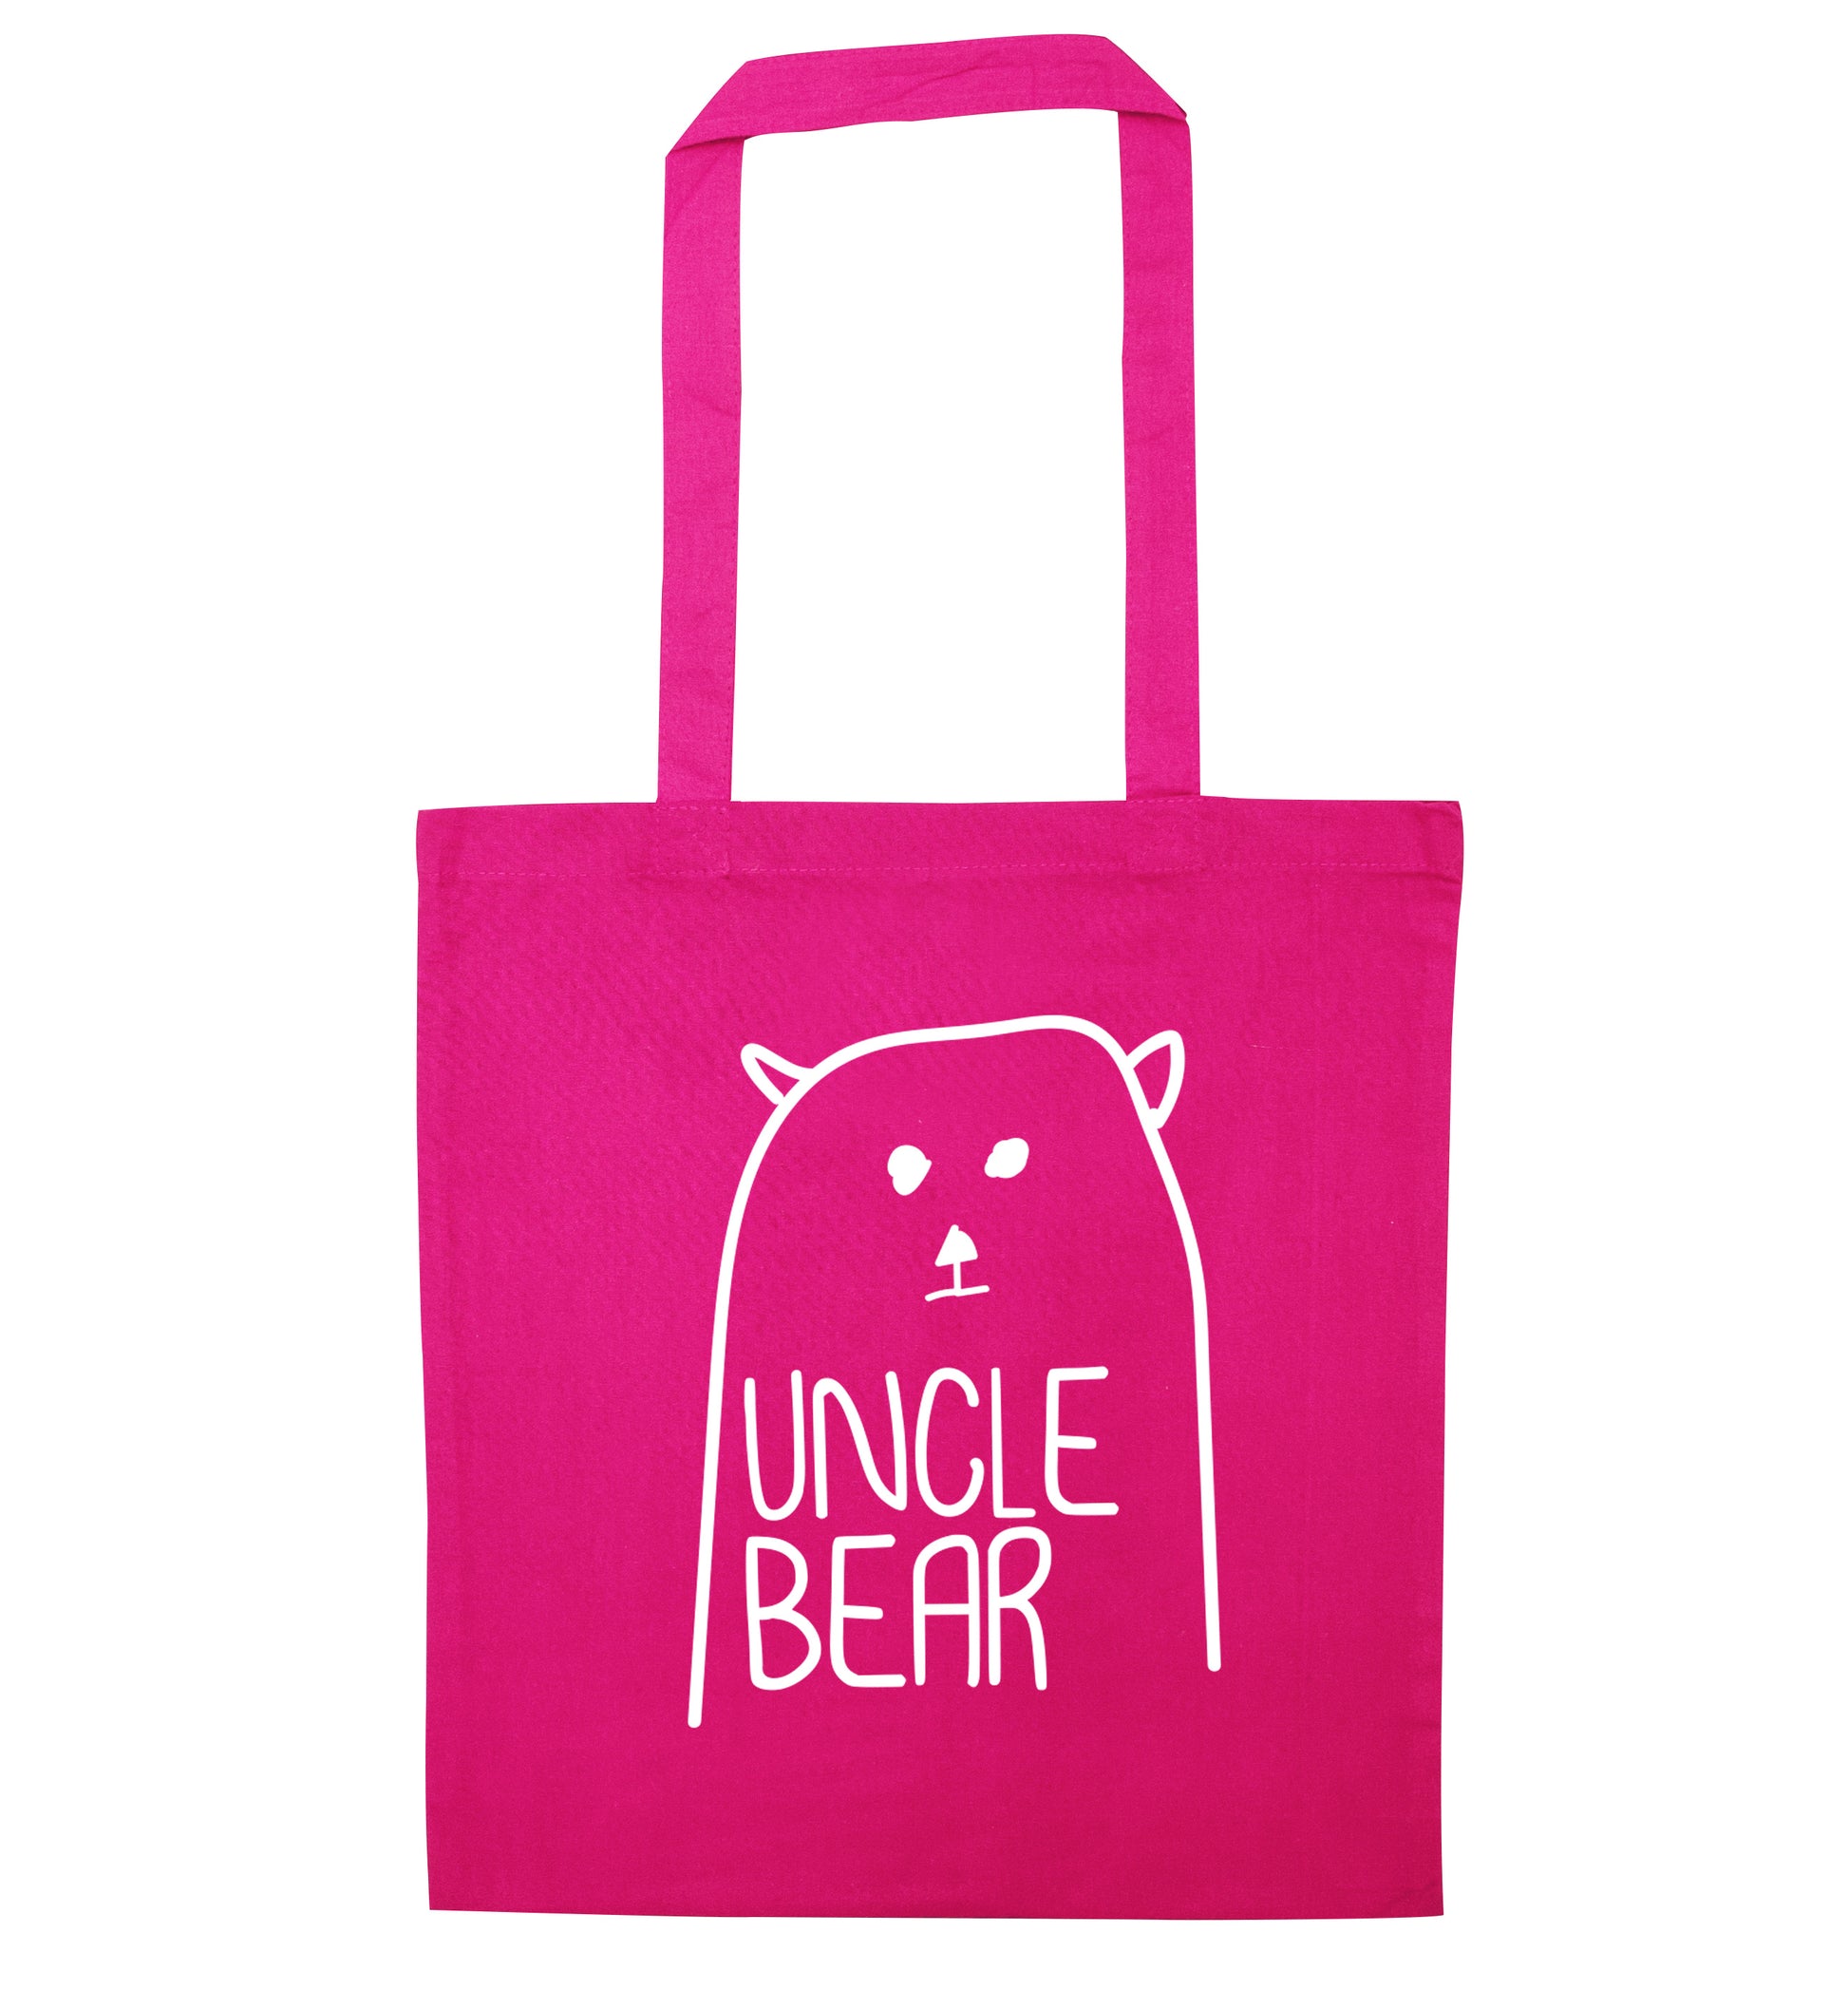 Uncle bear pink tote bag